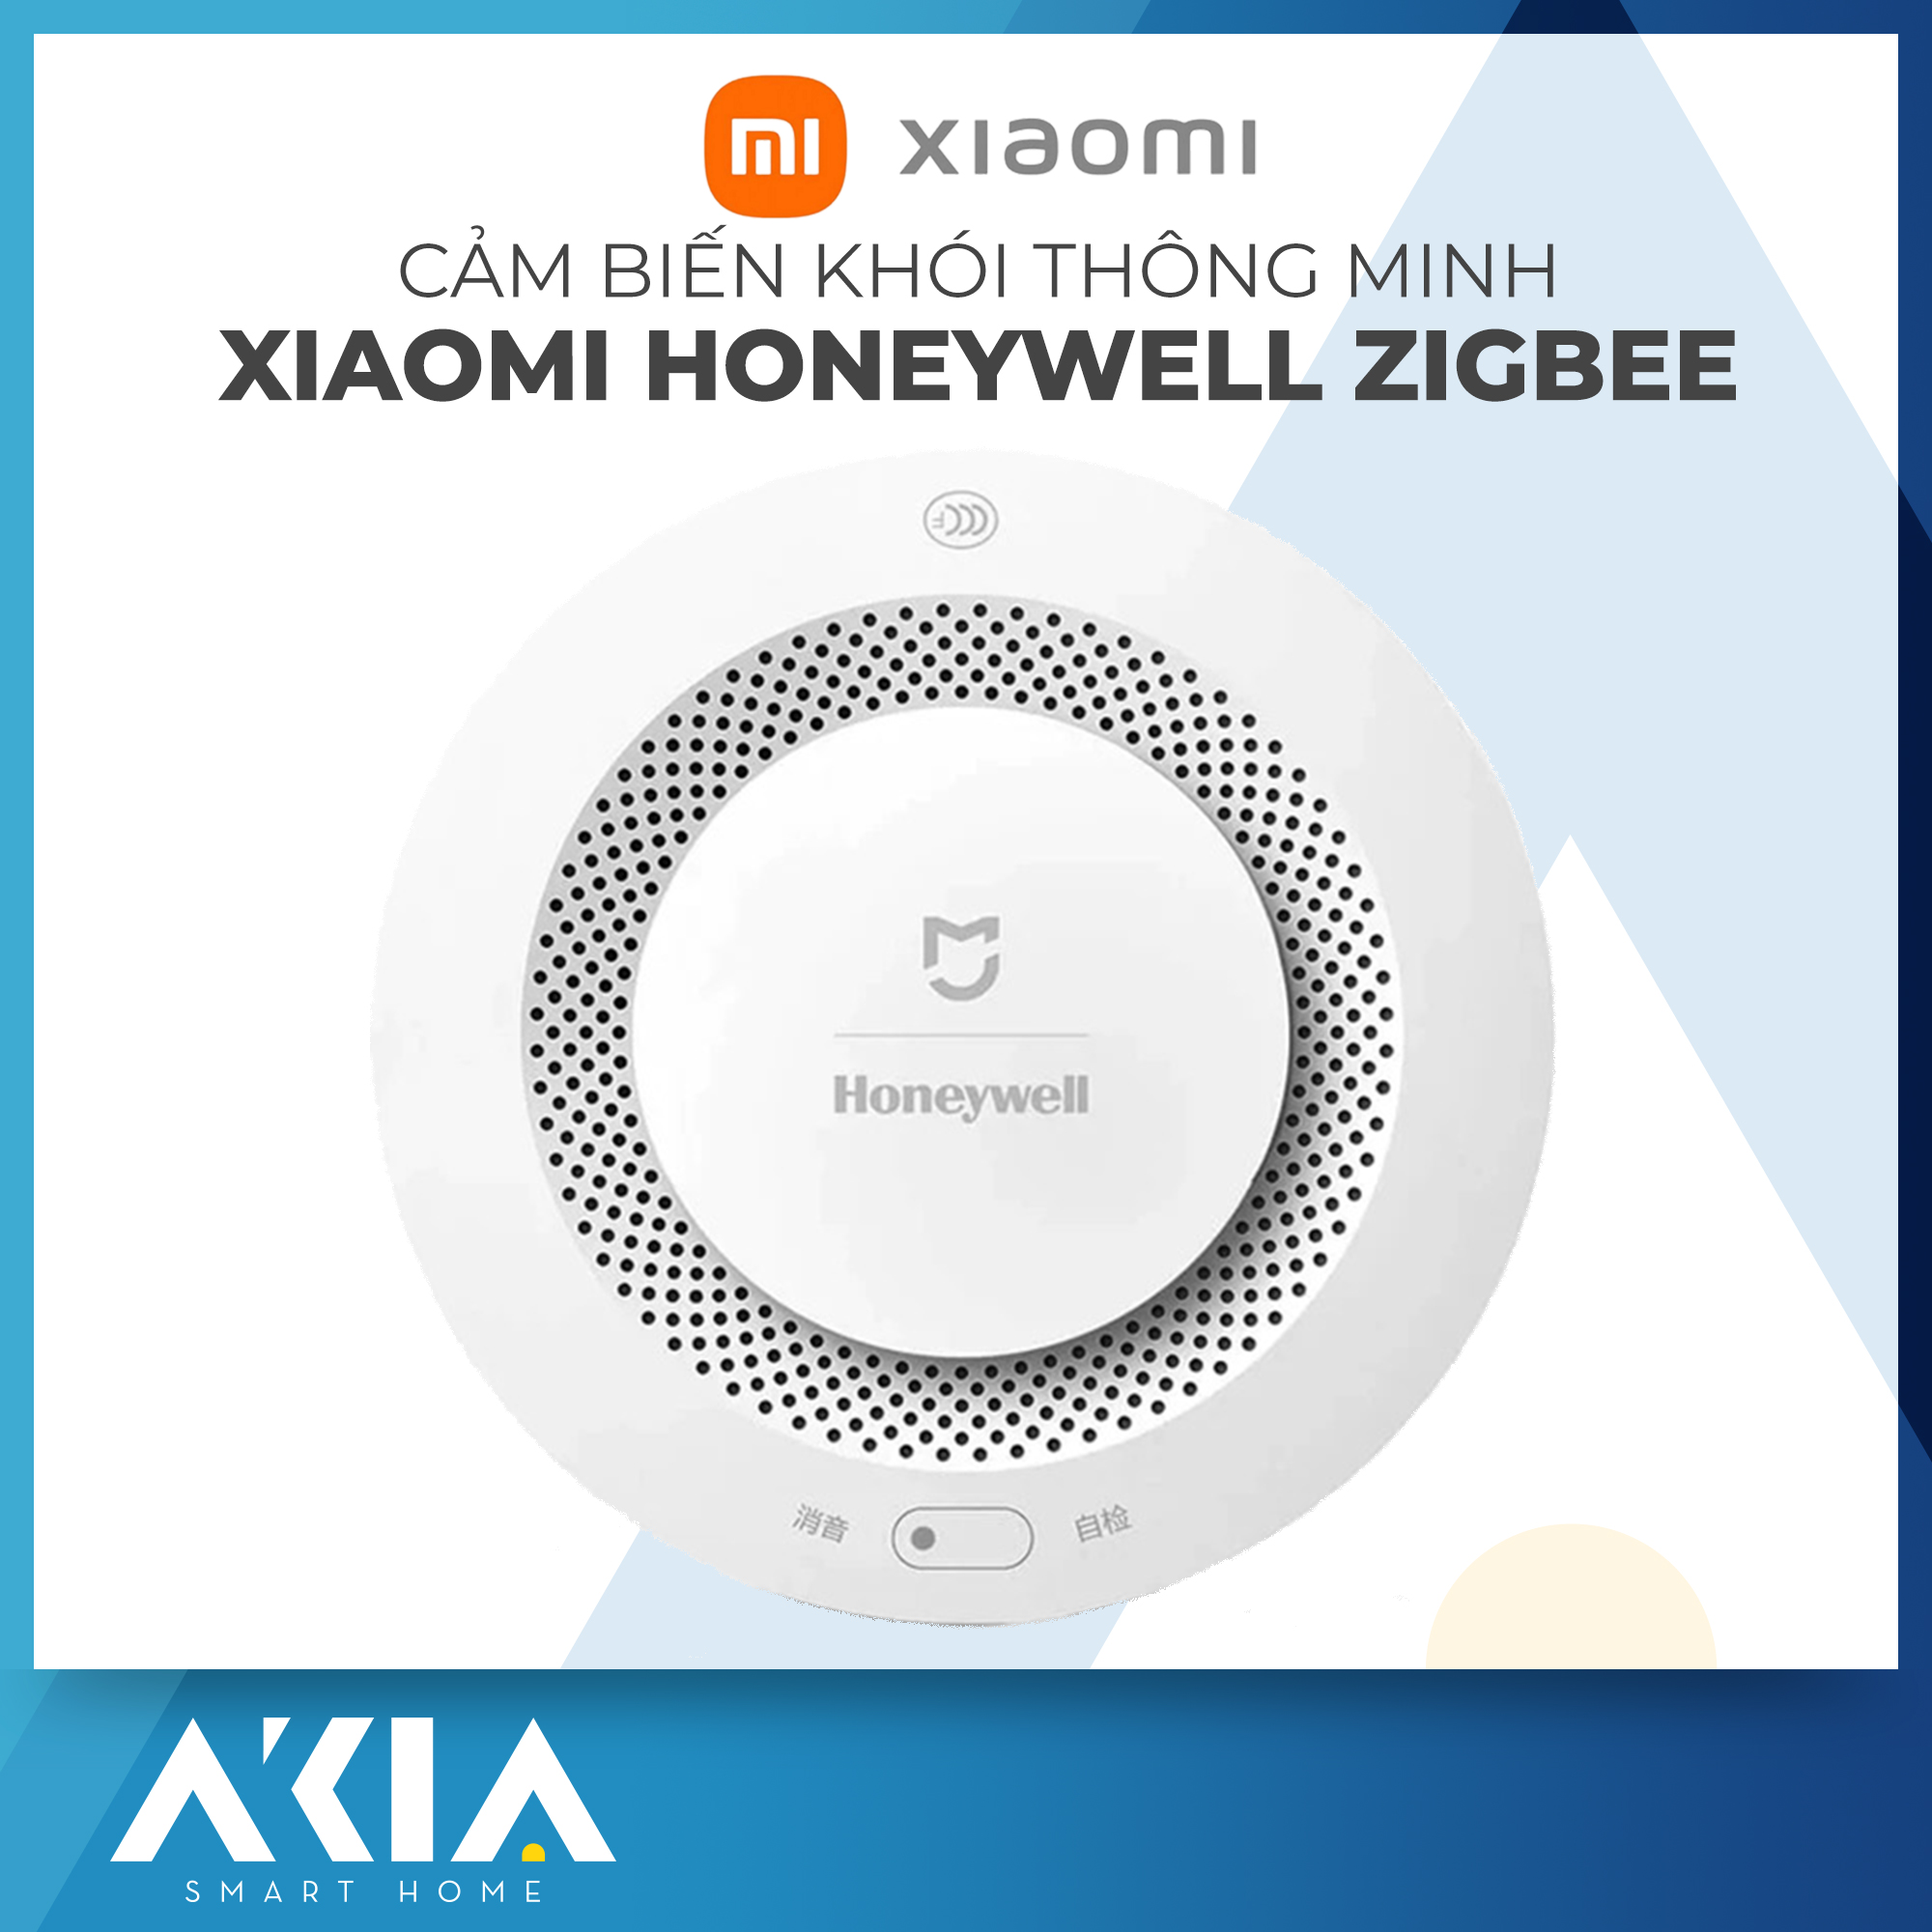 Cảm biến khói Xiaomi Honeywell bản Zigbee và Bluetooth